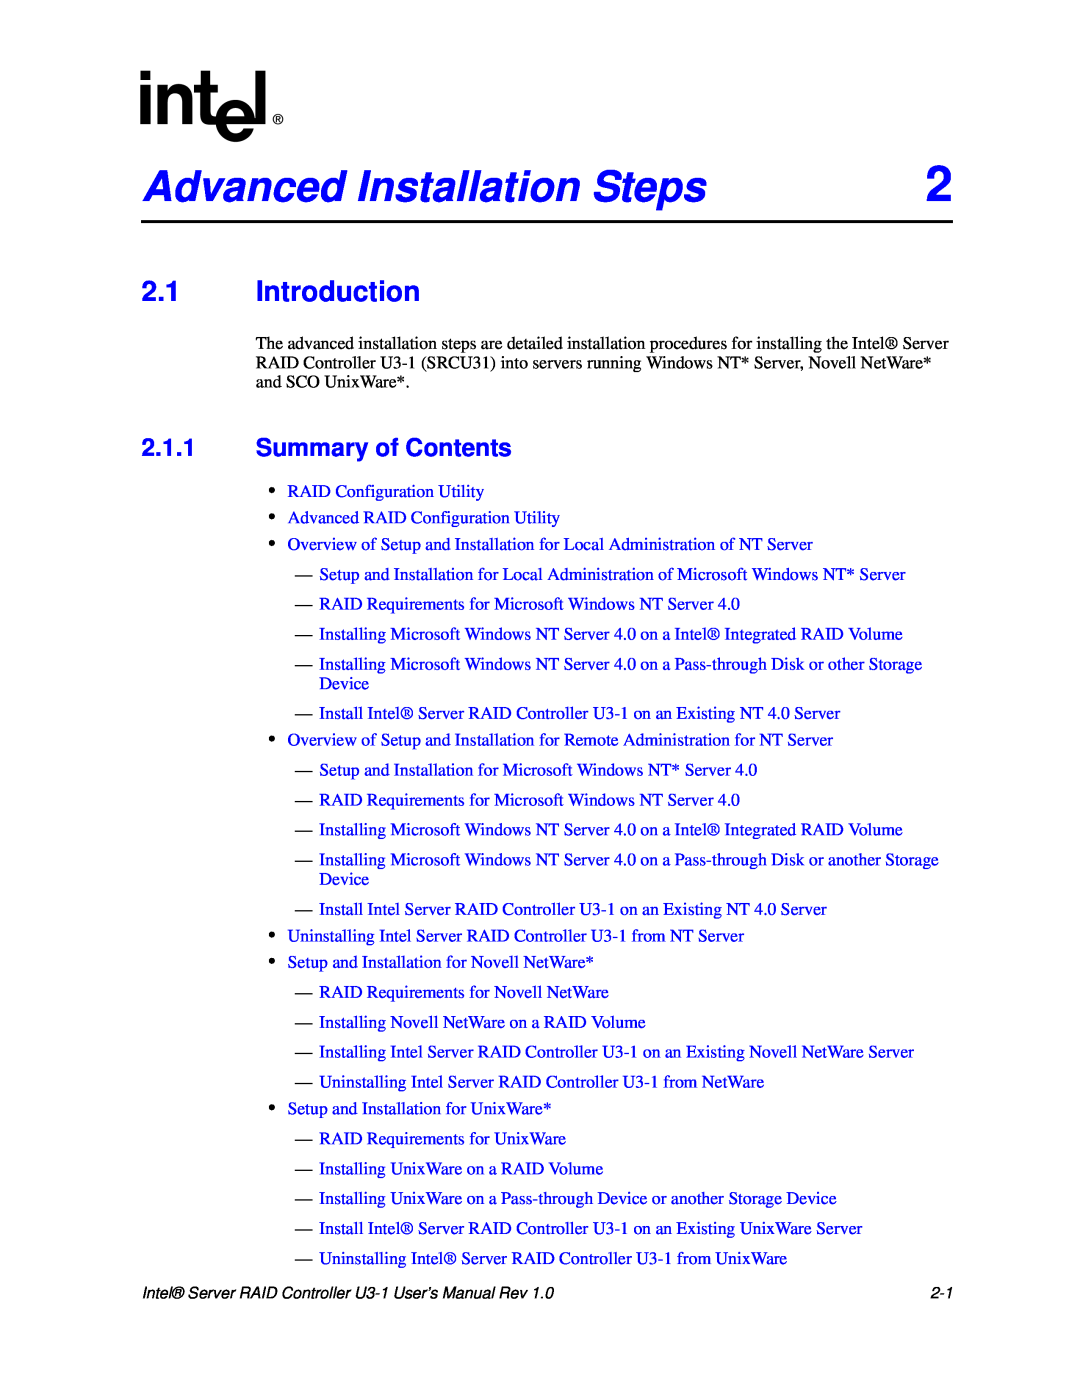 Intel SRCU31 user manual Advanced Installation Steps, 2.1Introduction 